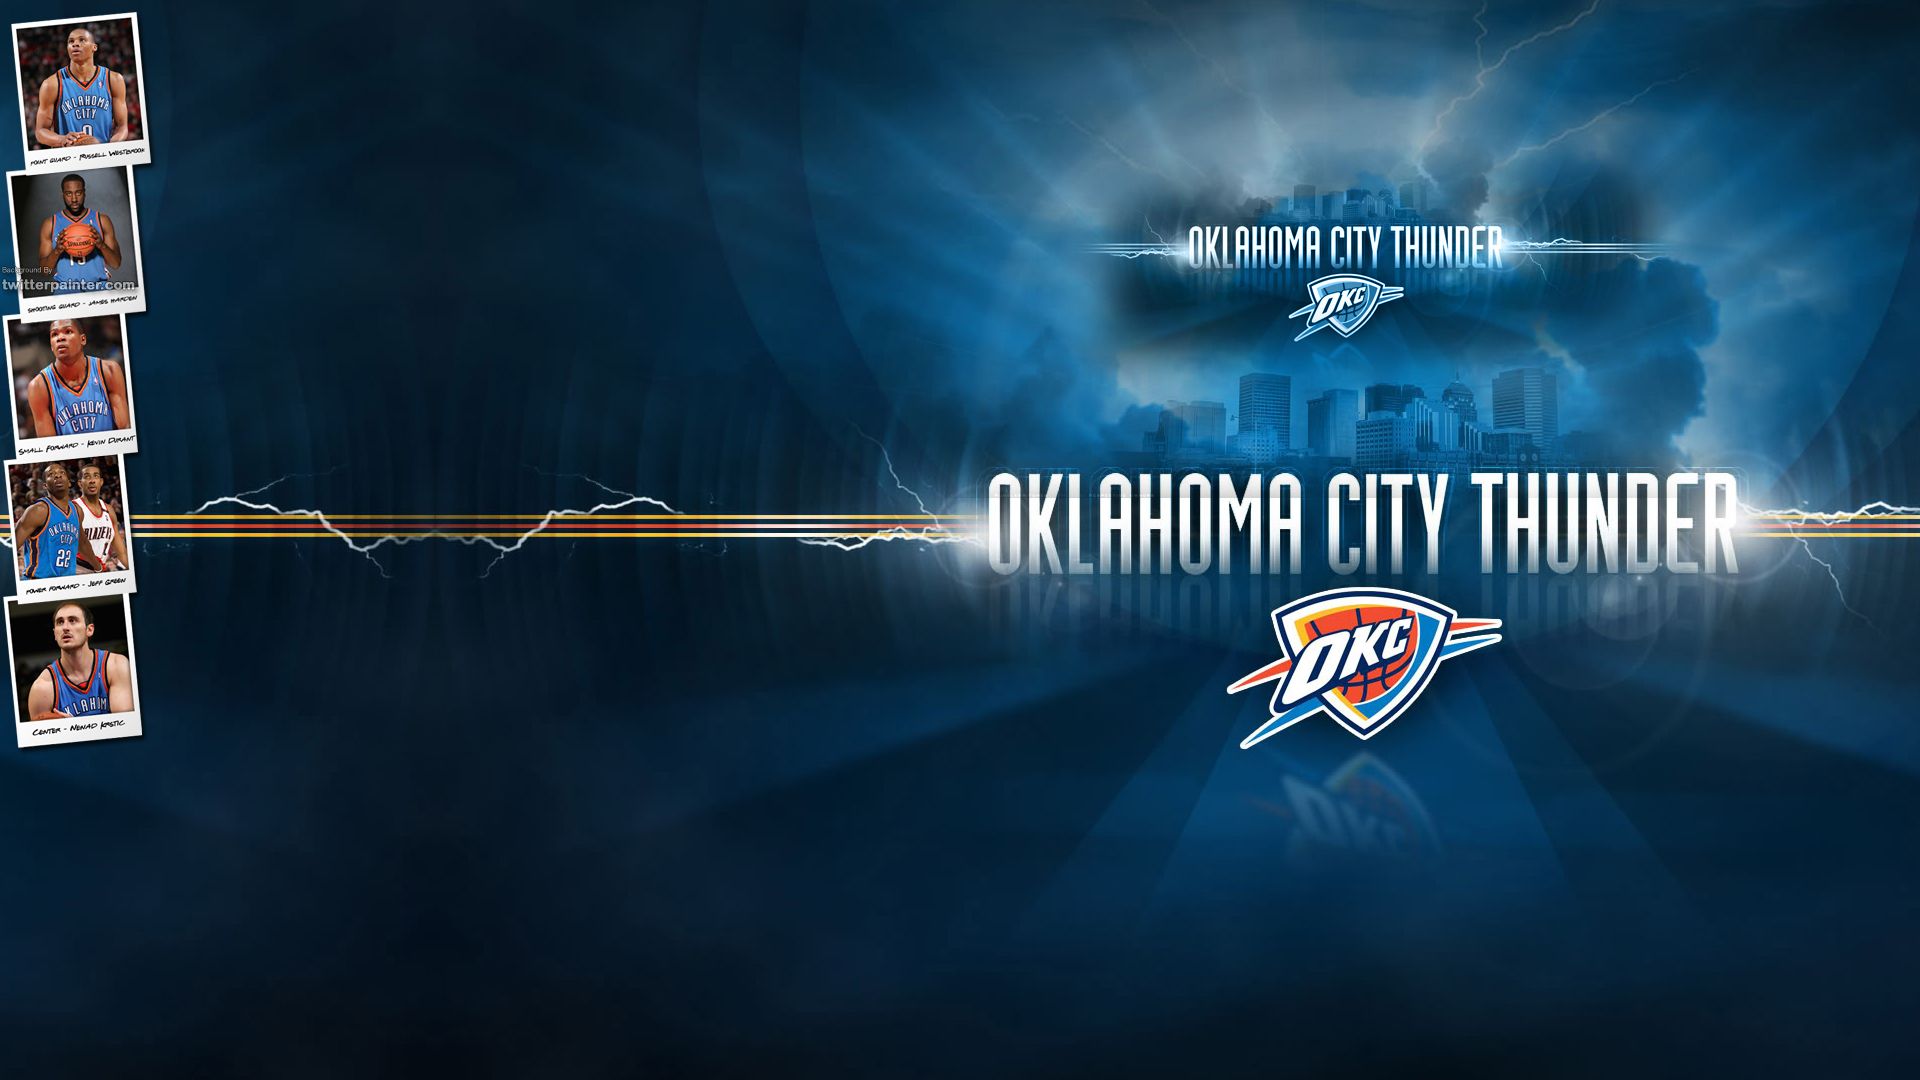 Oklahoma City Thunder Basketball Wallpaper - DreamLoveWallpapers